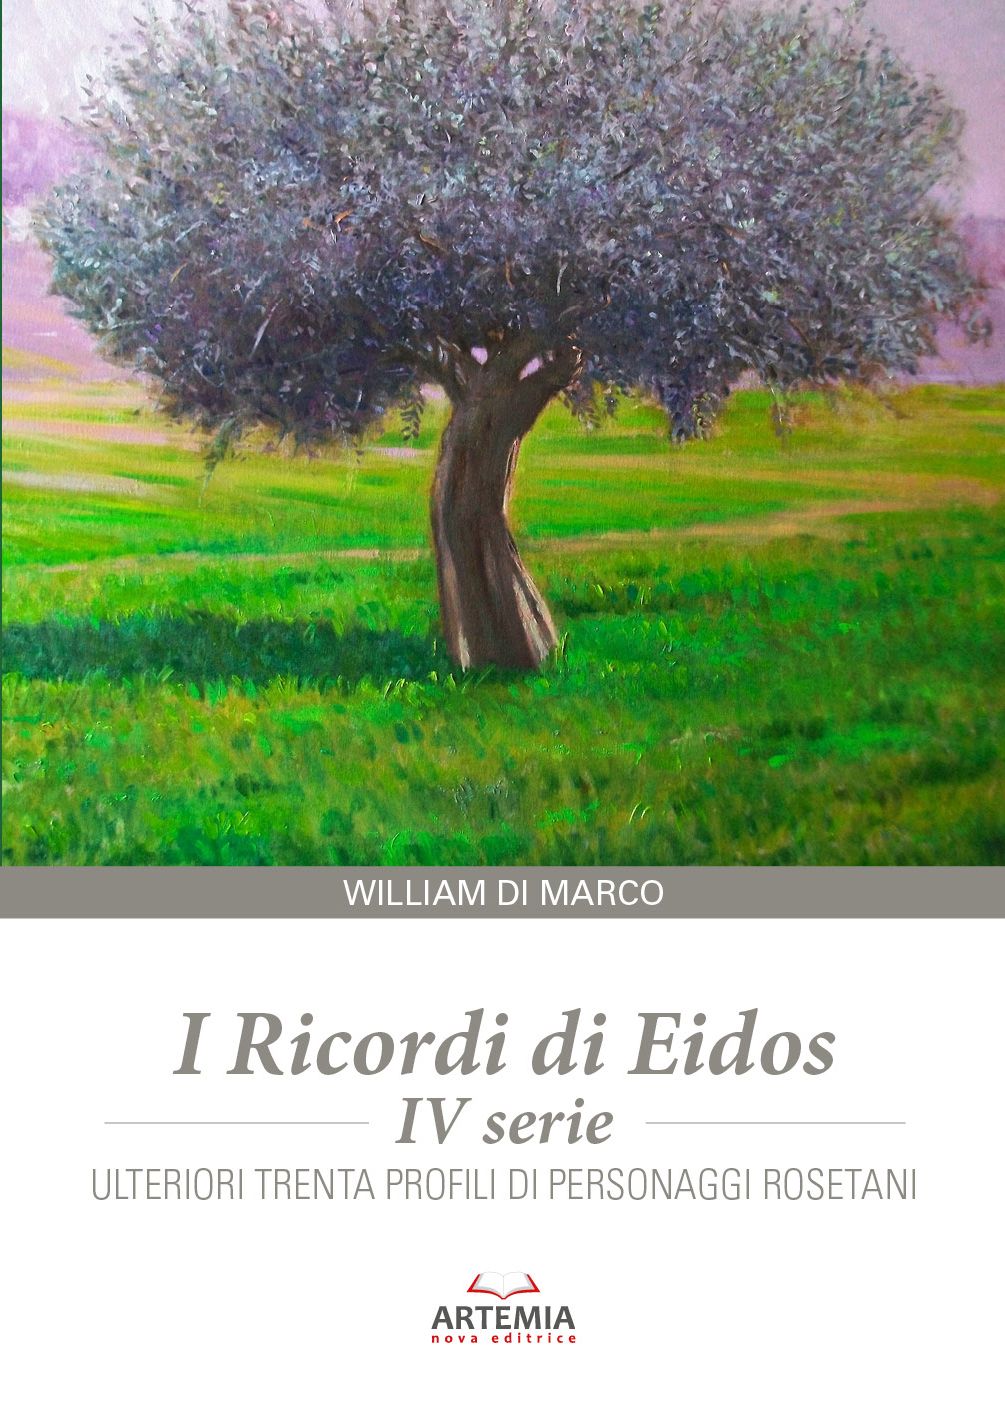 http://www.williamdimarco.it/files/023 - I Ricordi di Eidos - IV serie.jpg